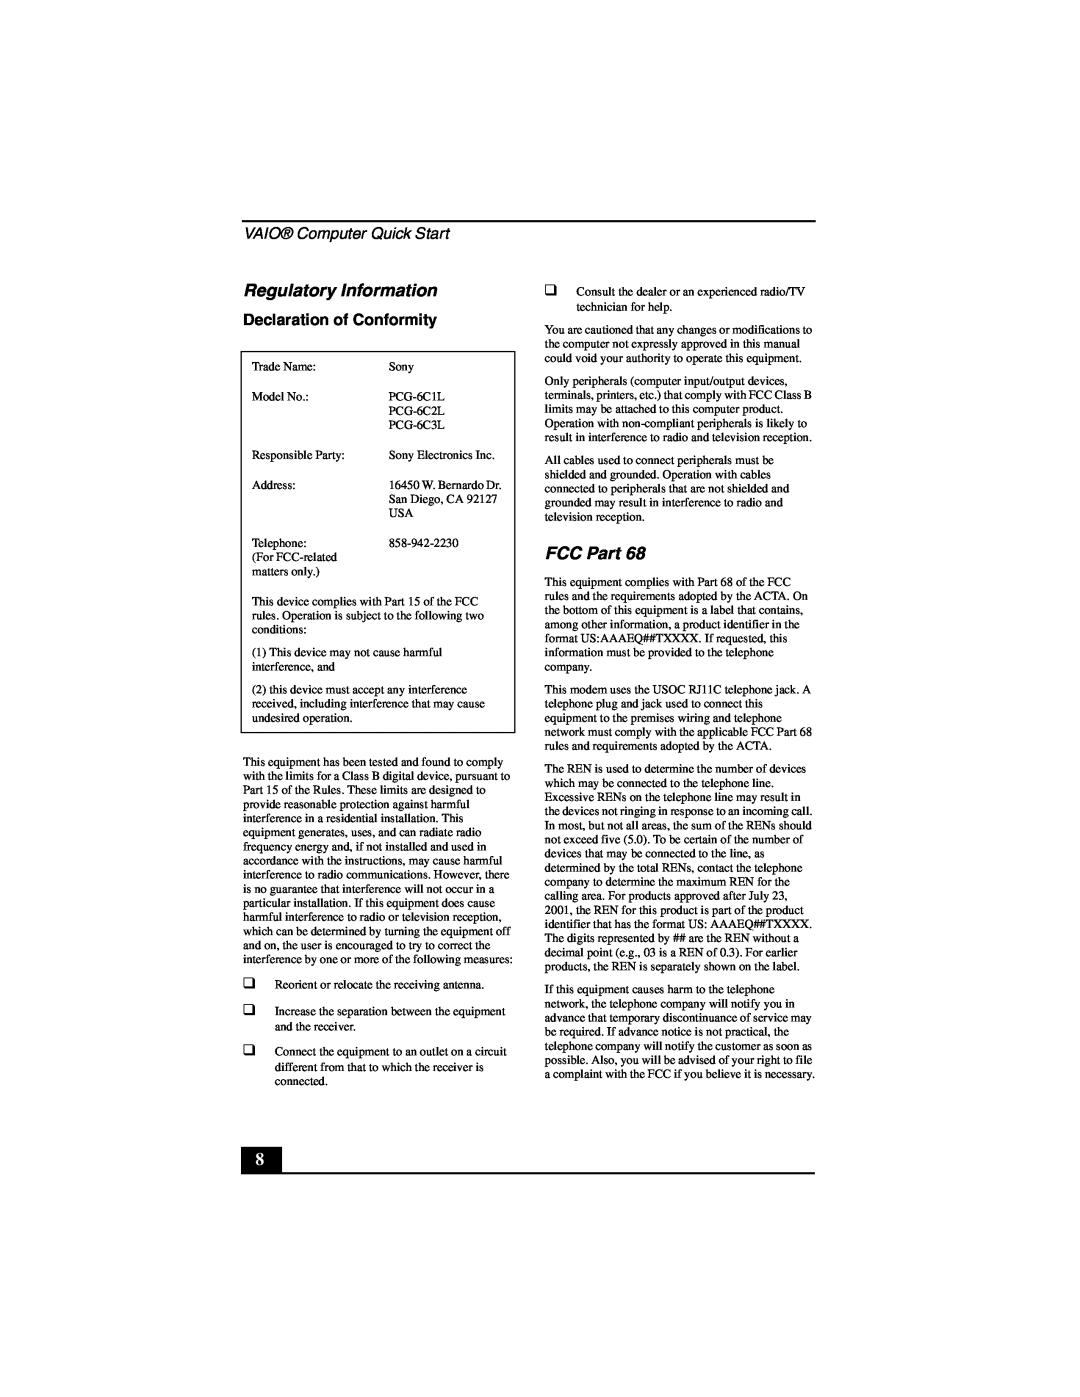 Sony VGN-S100 quick start Regulatory Information, FCC Part, VAIO Computer Quick Start, Declaration of Conformity 